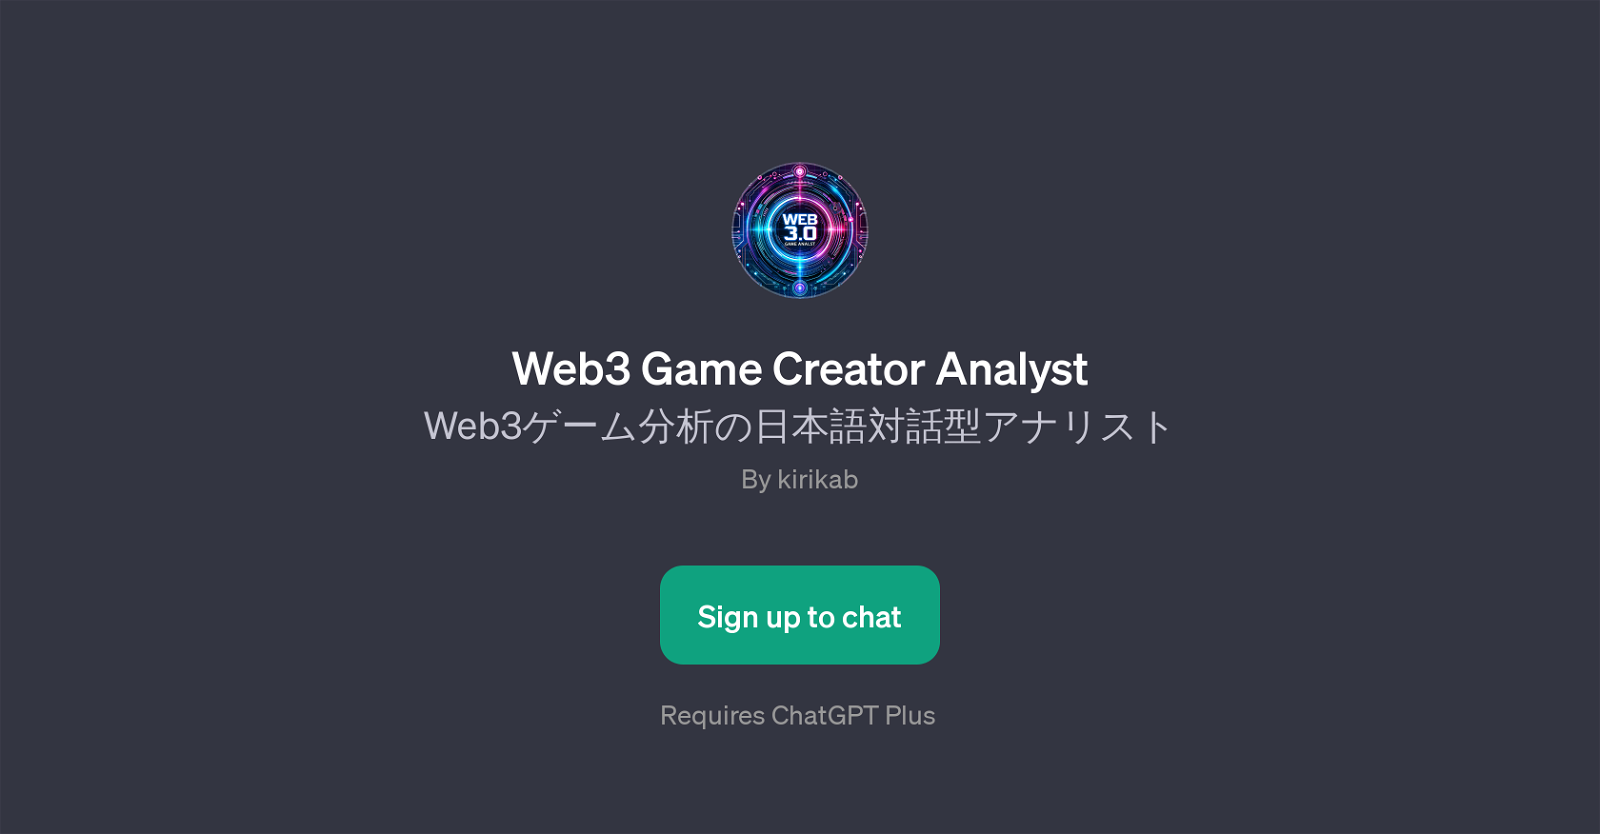 Web3 Game Creator Analyst website